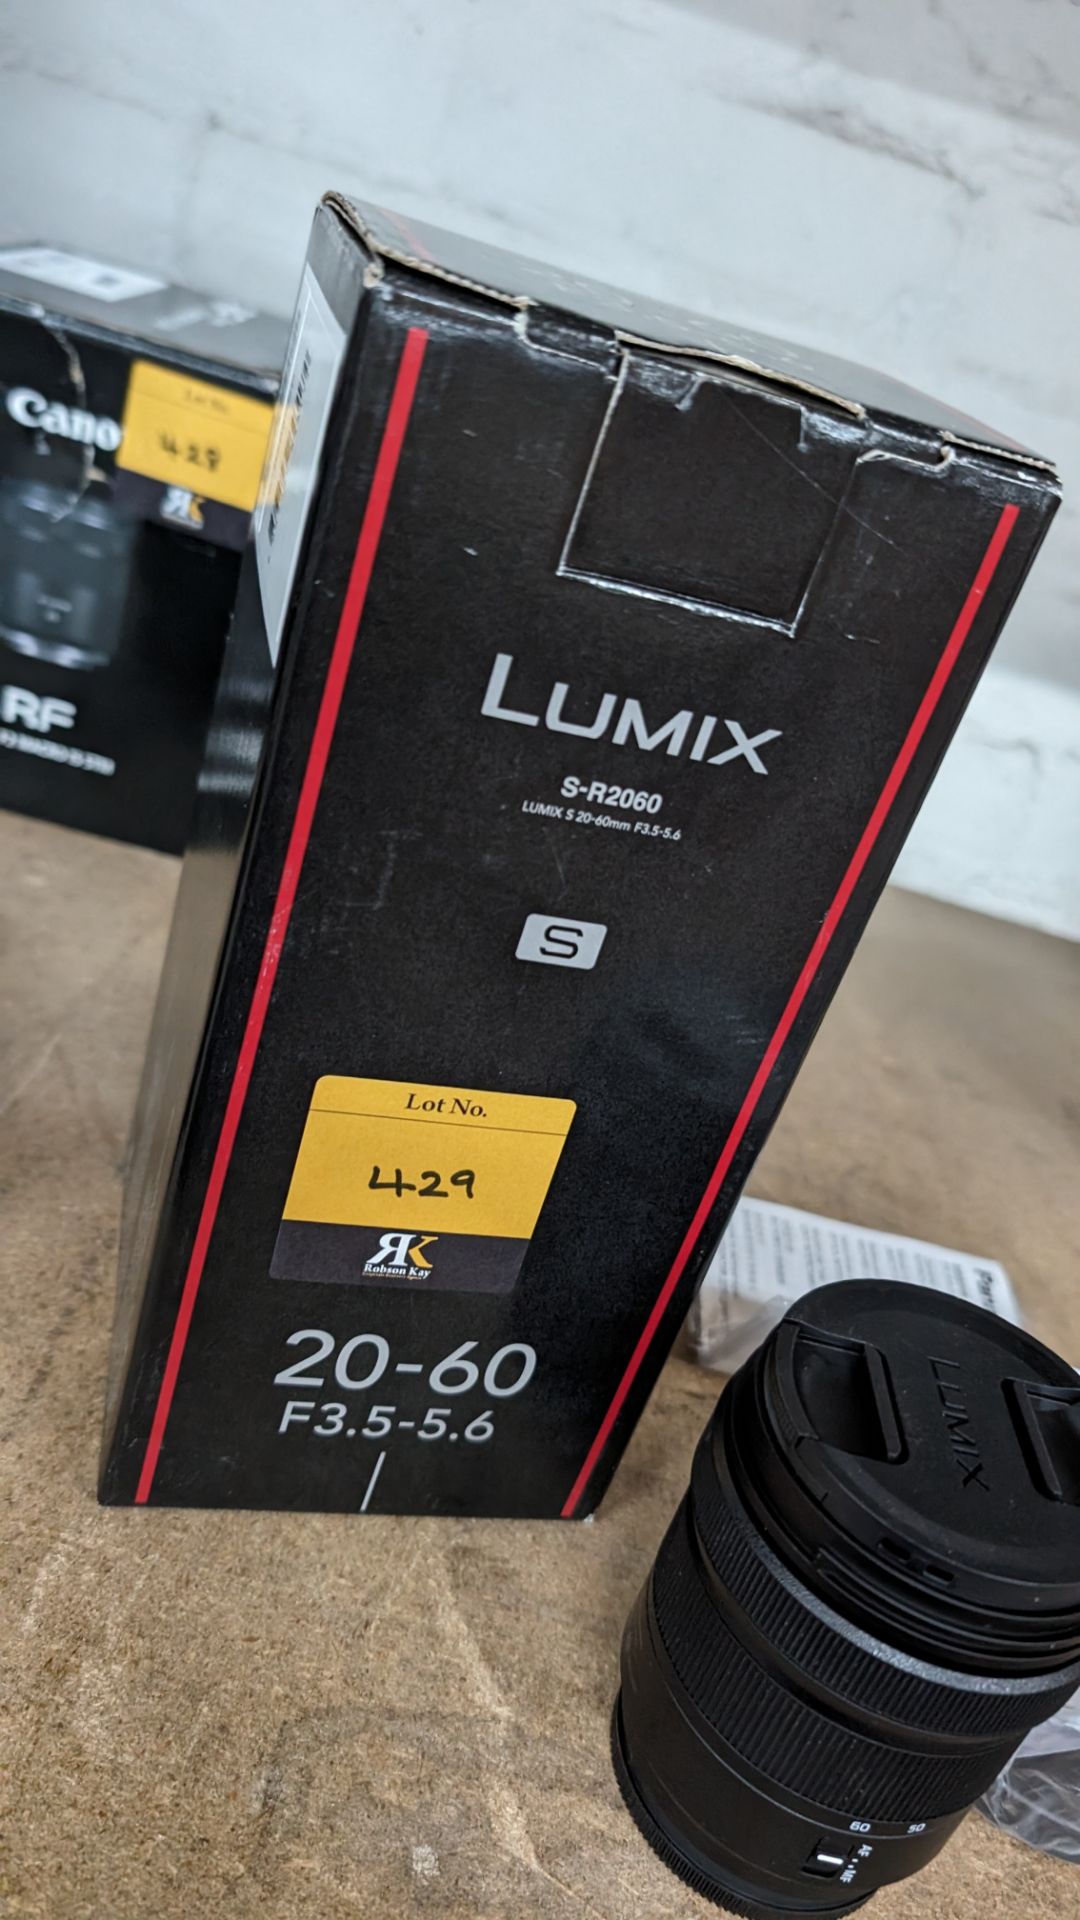 Panasonic Lumix model S-R2060 lens, 20-60mm, f3.5-5.6 - Bild 12 aus 14